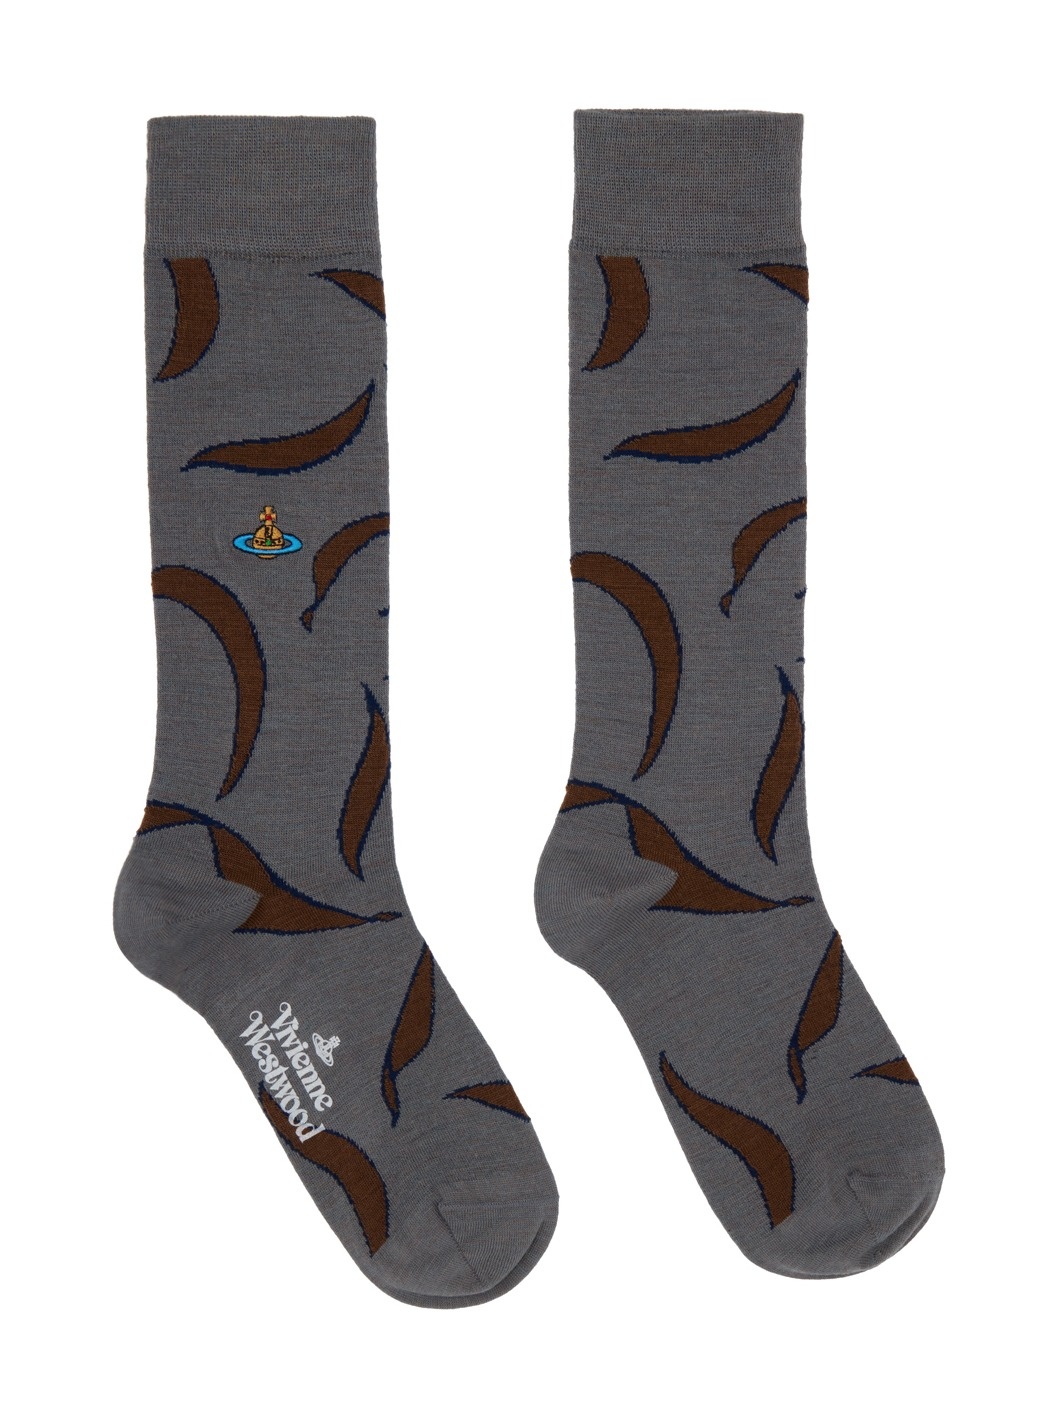 Gray Embroidered Socks - 1